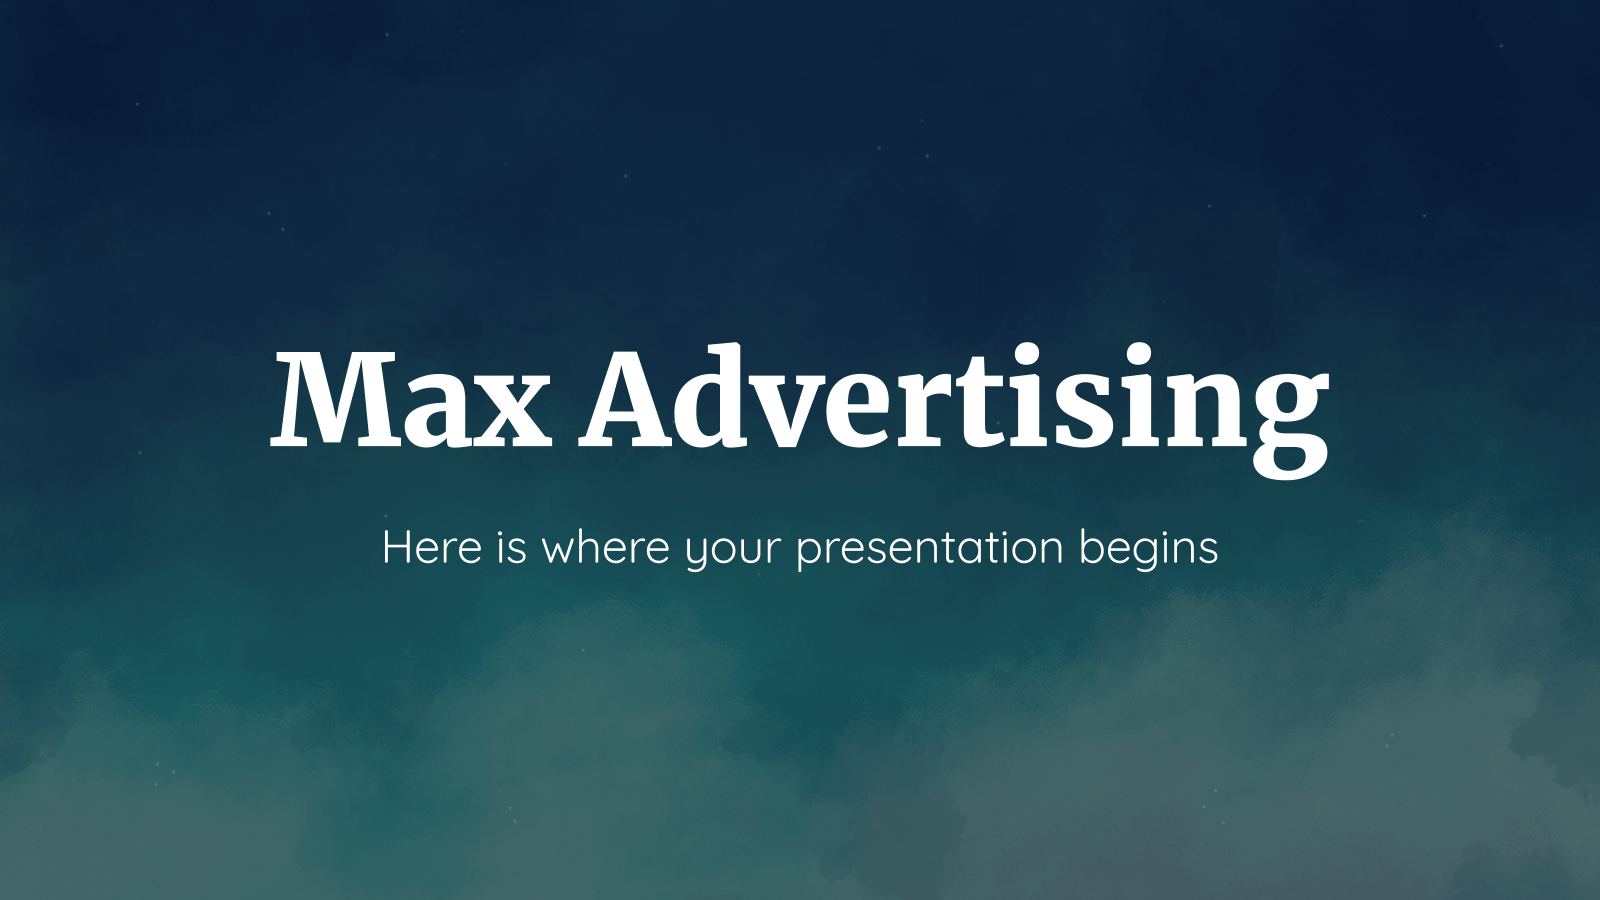 Max广告公司PowerPoint模板